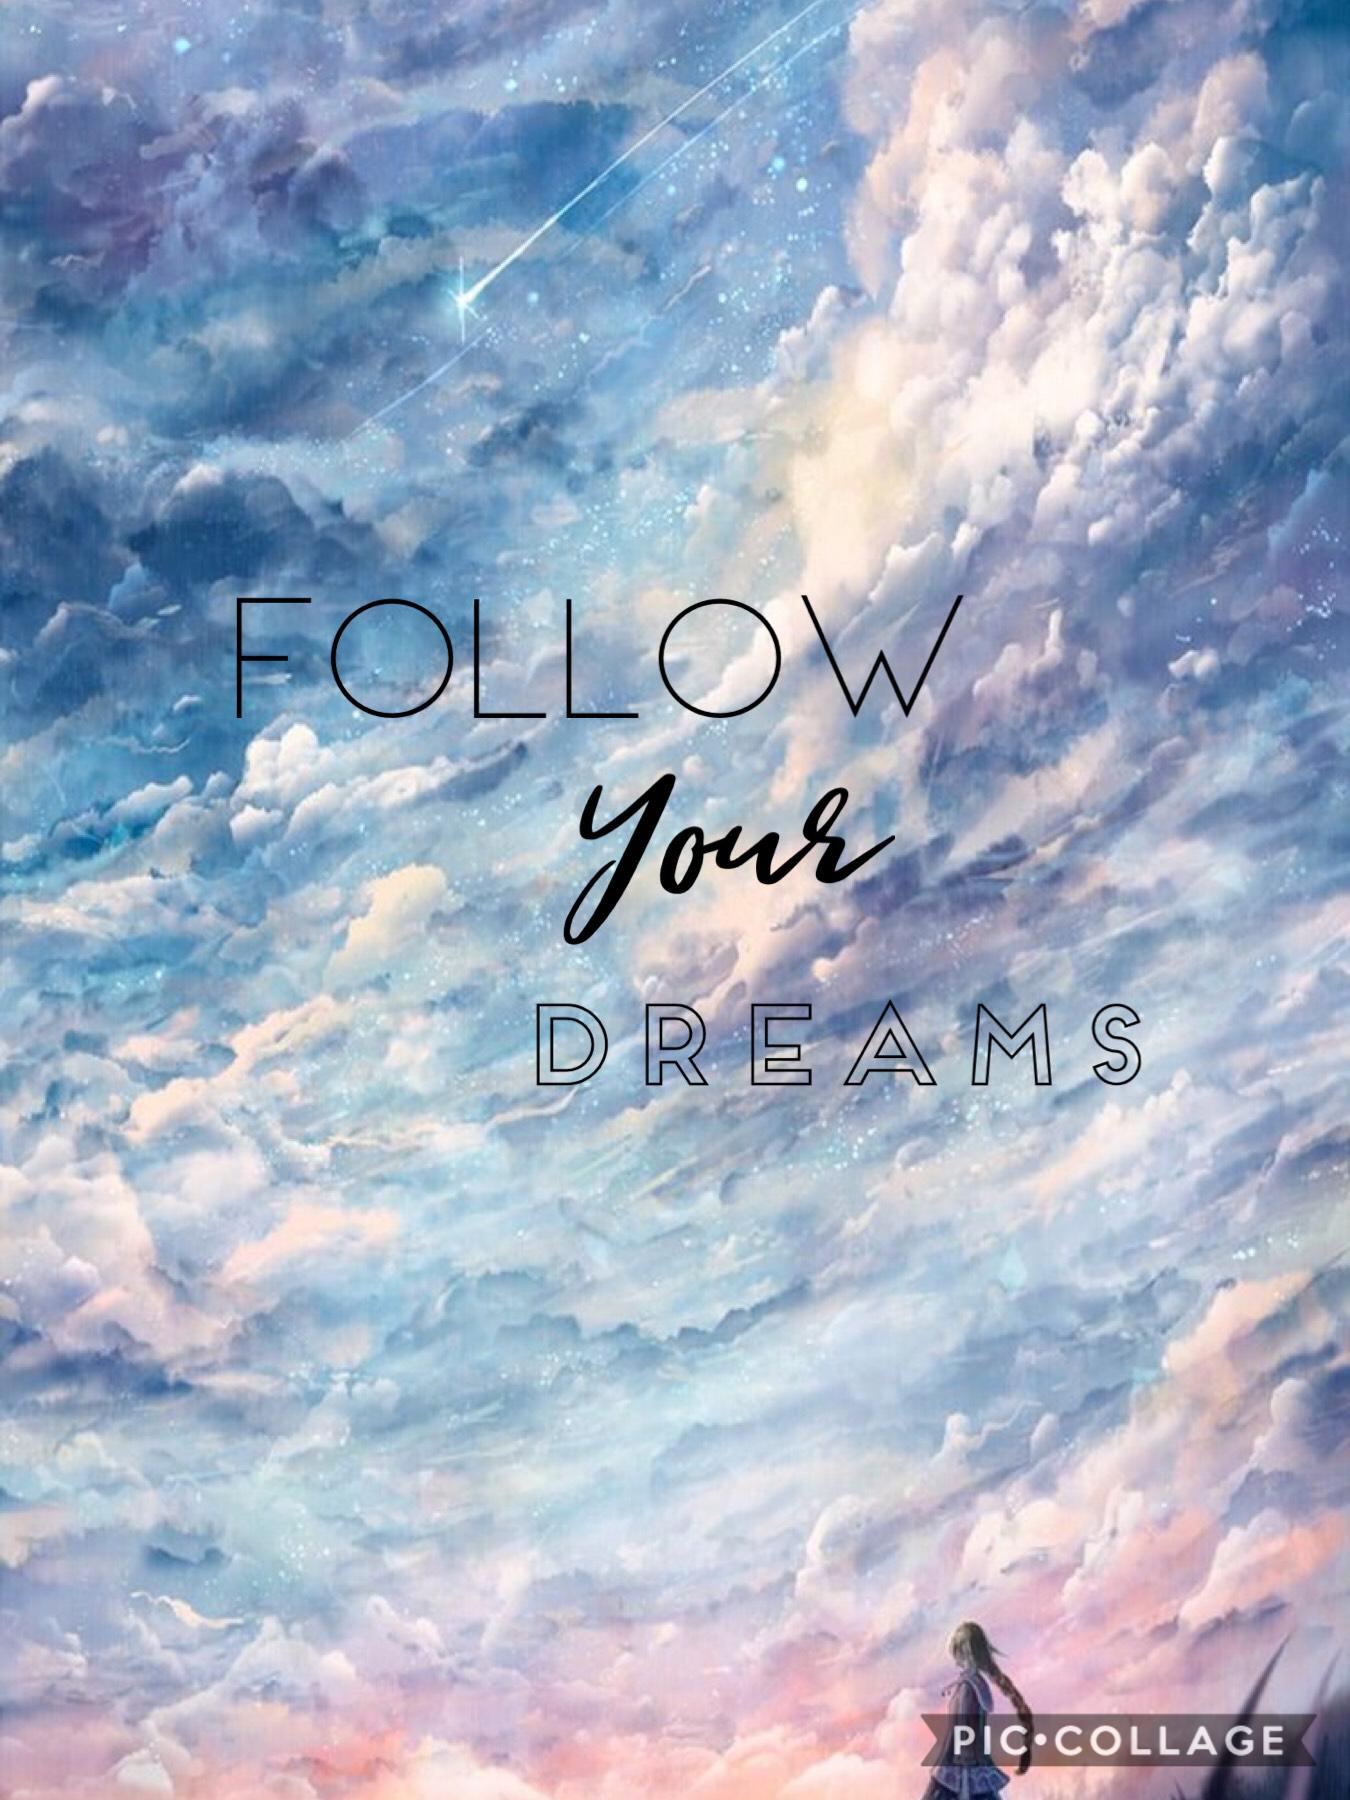 #Follow your dreams